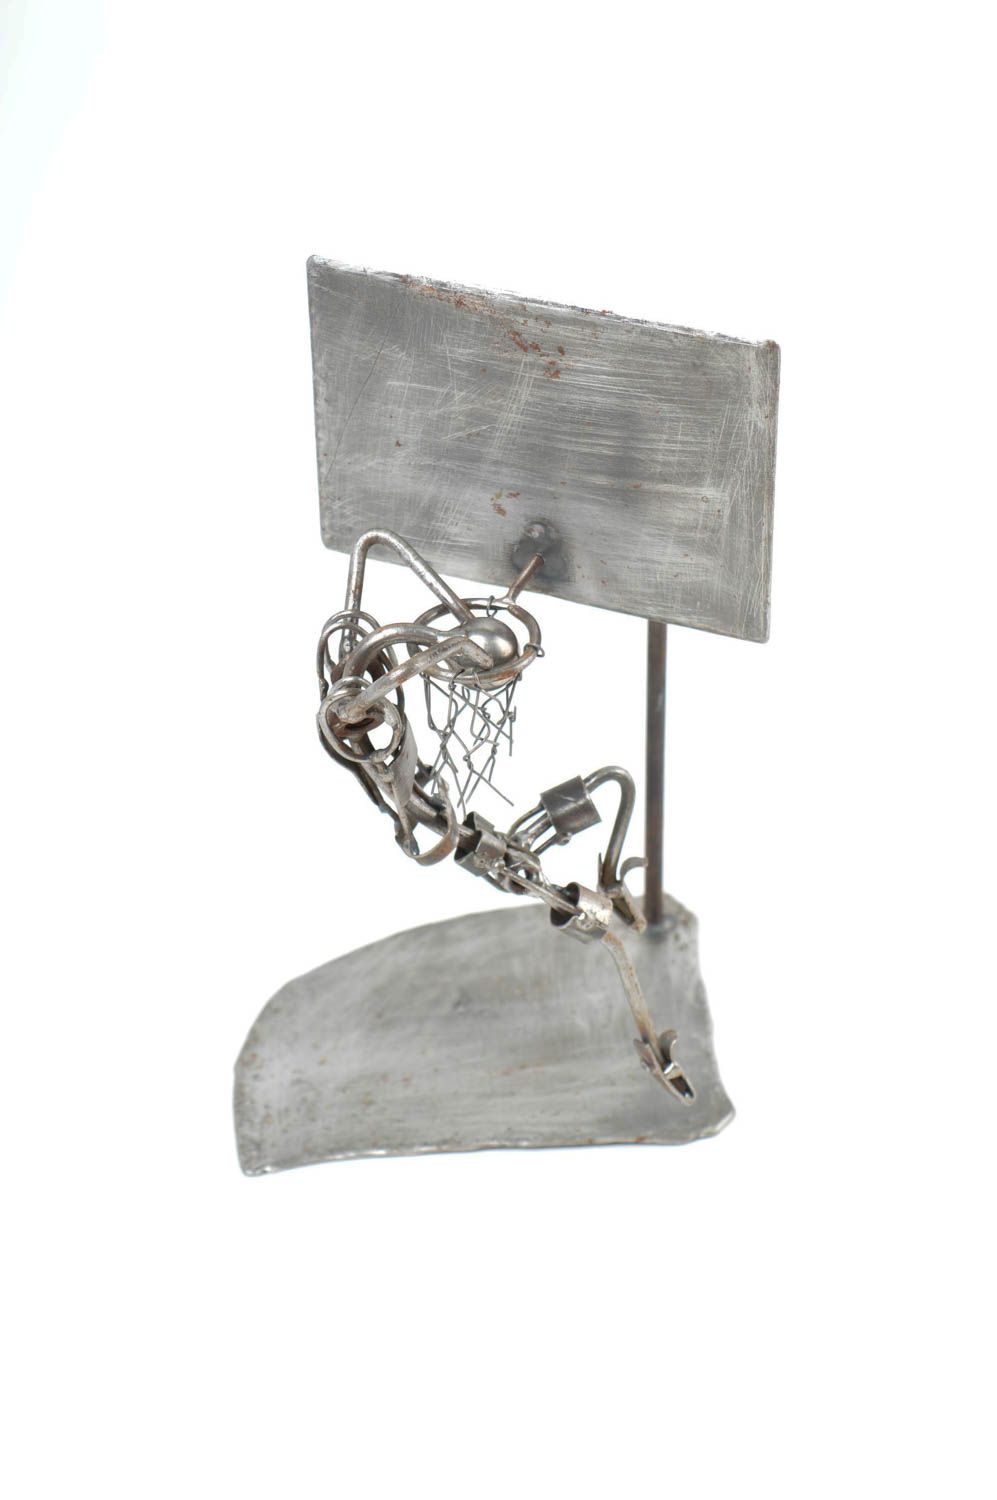 Unusual handmade metal figurine contemporary art metal craft decorative use only photo 2